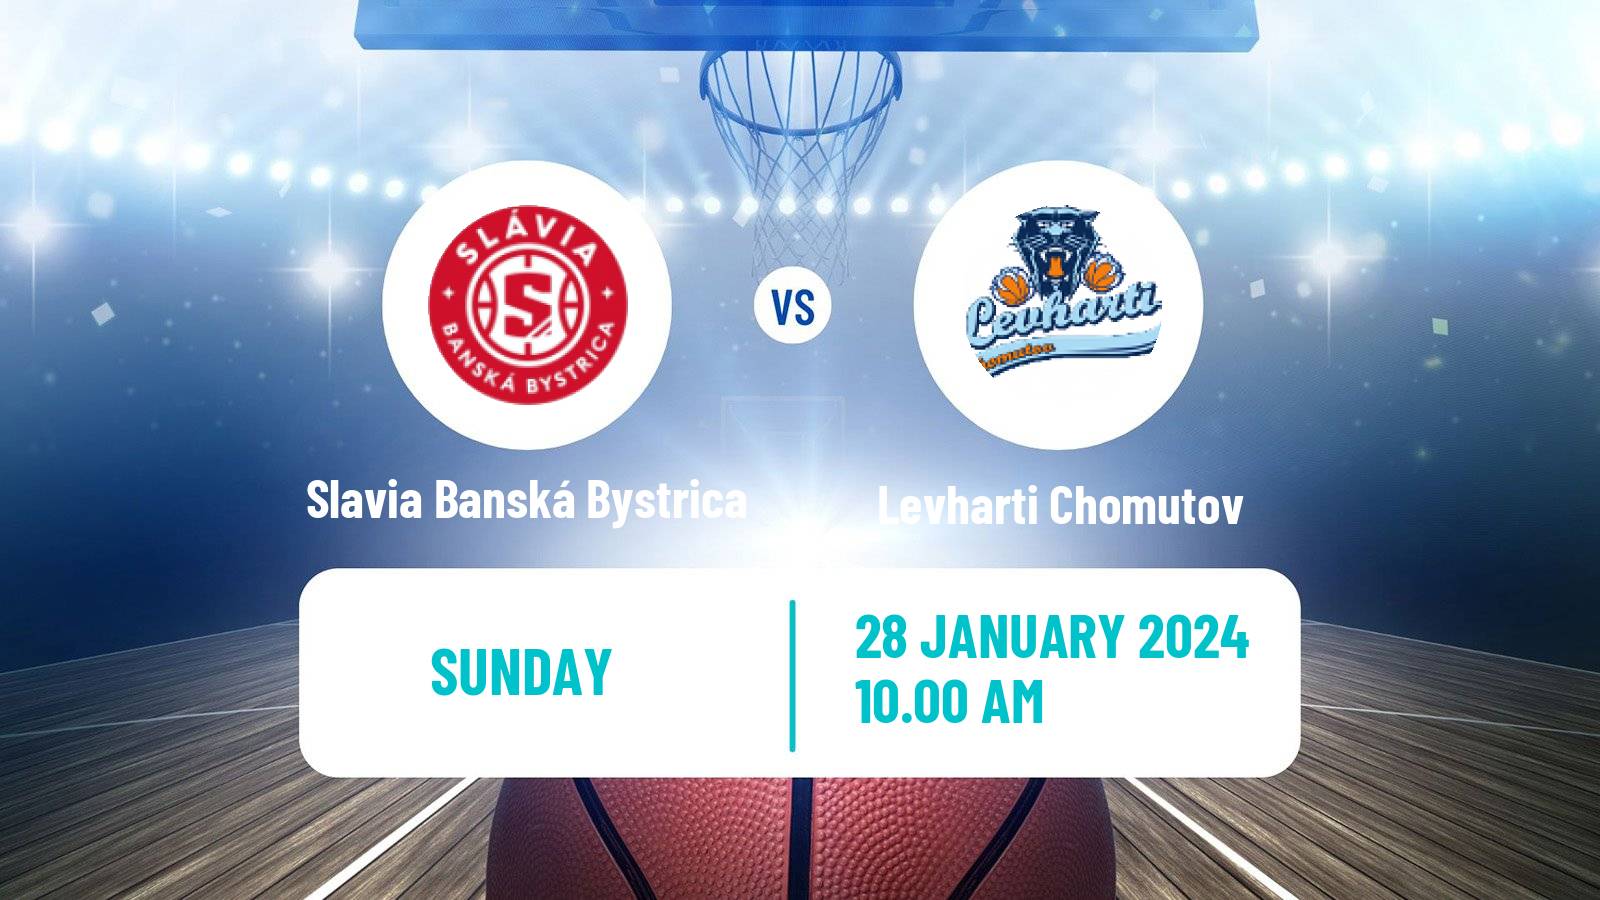 Basketball Federal Cup Basketball Women Slavia Banská Bystrica - Levharti Chomutov